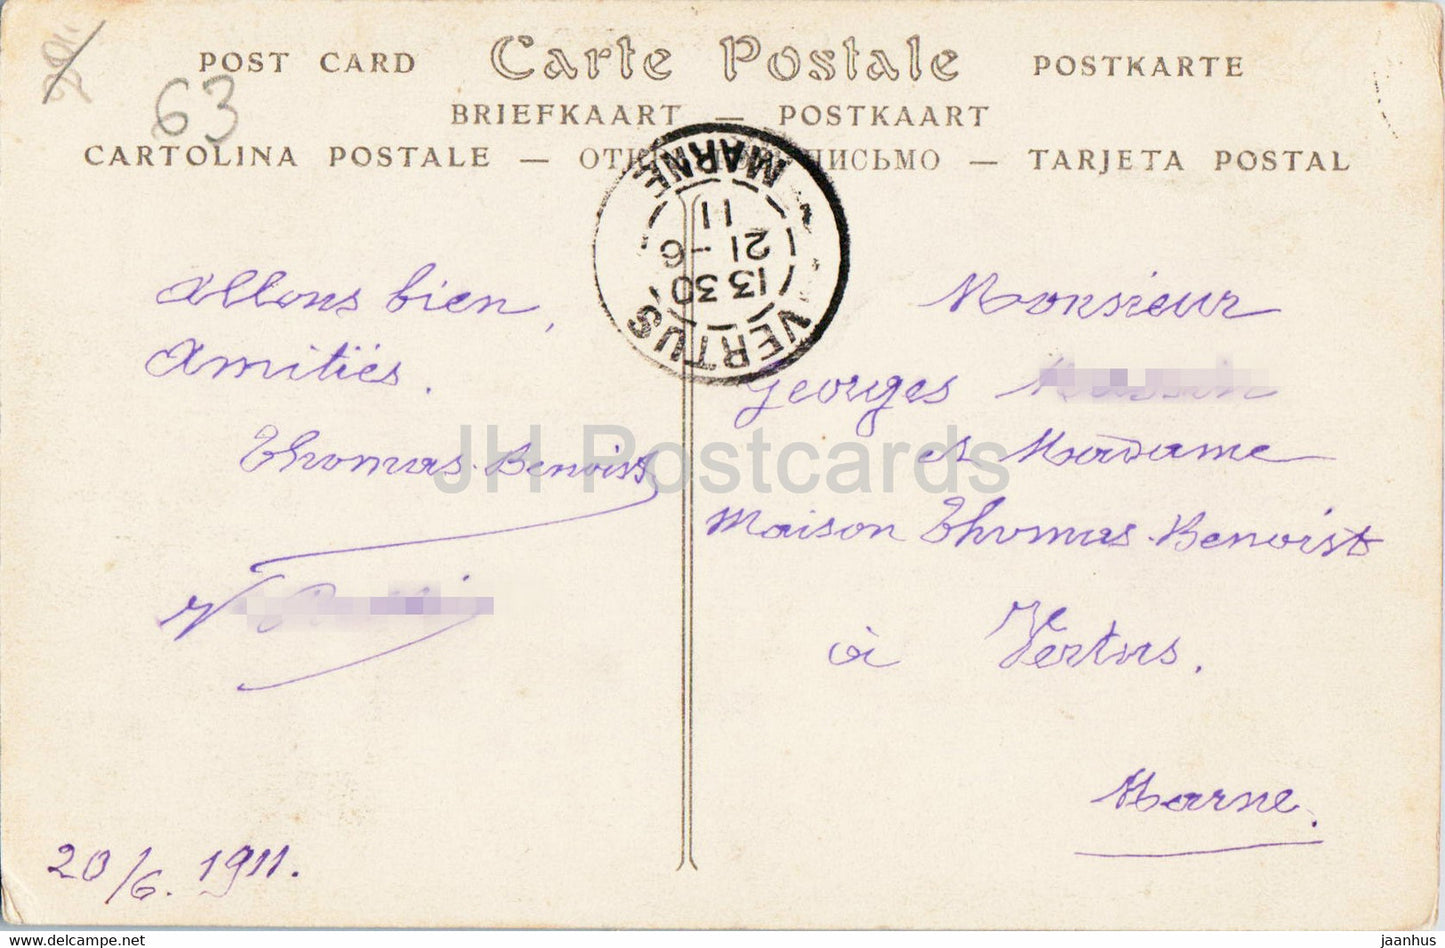 Clermont Ferrand - Vue generale prise de Montjuzet - 250 - old postcard - 1911 - France - used